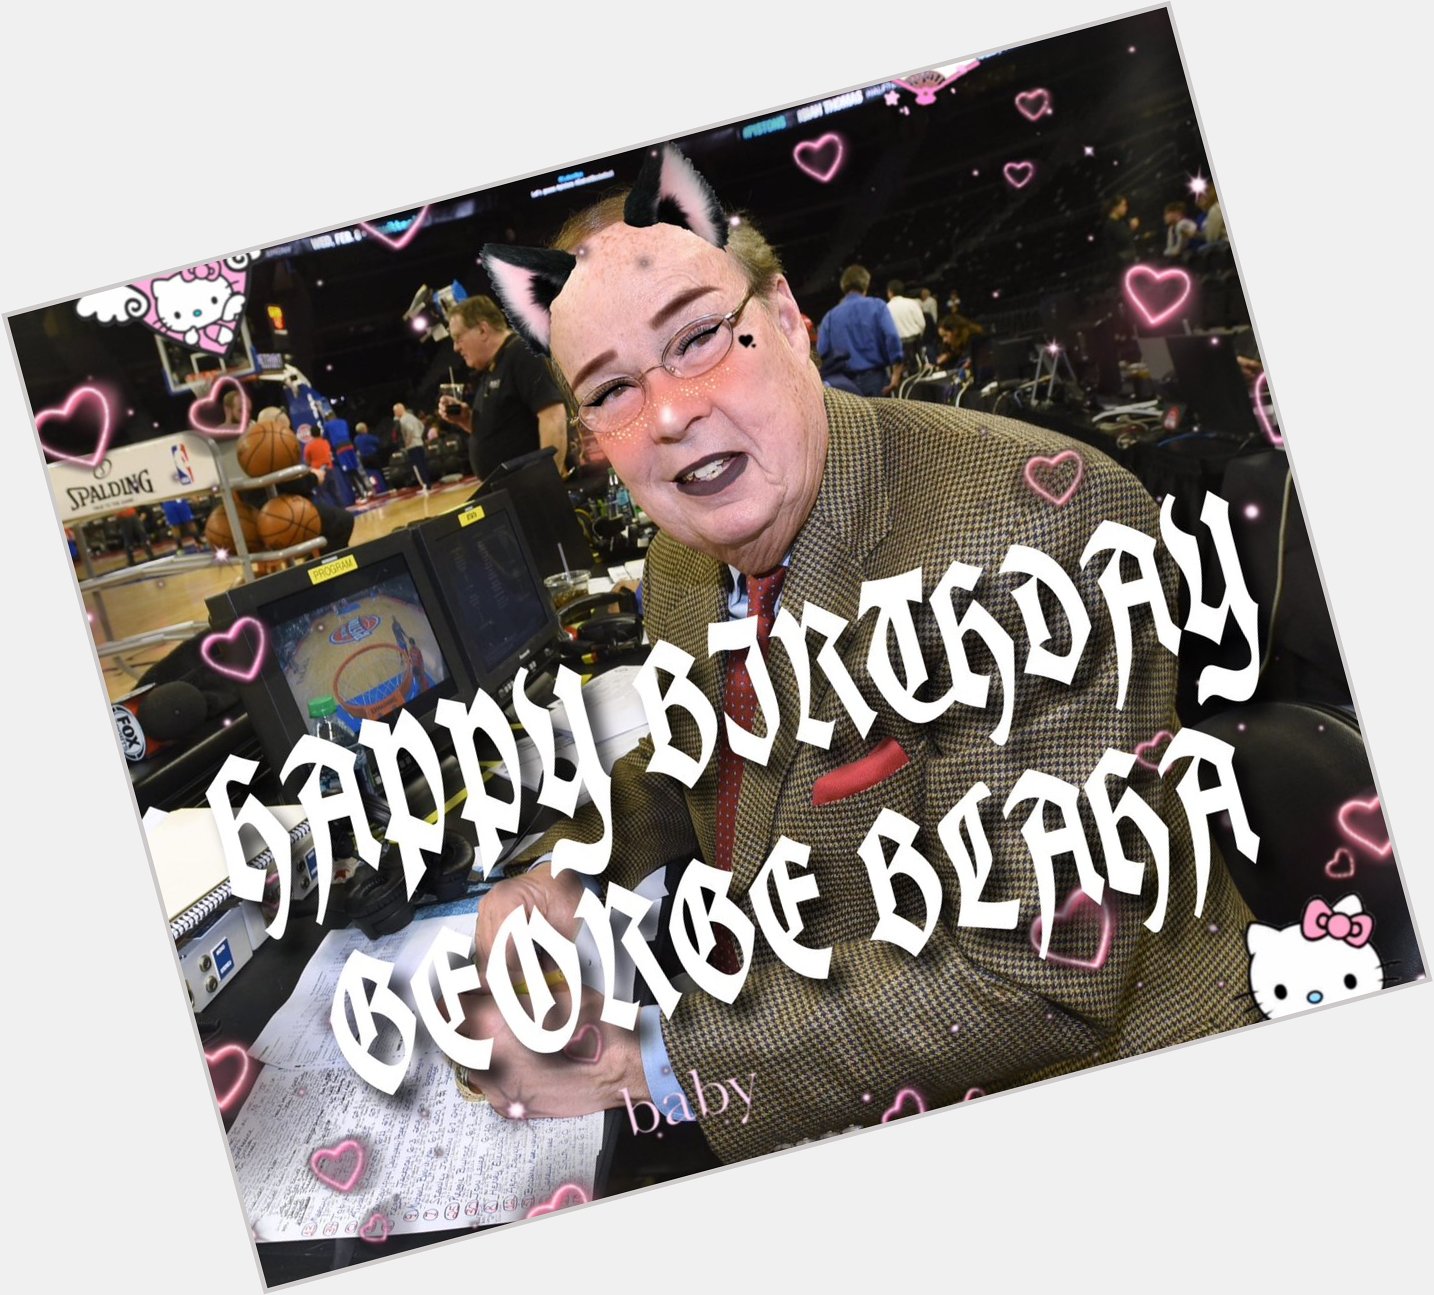 Happy birthday piston s legend george blaha 